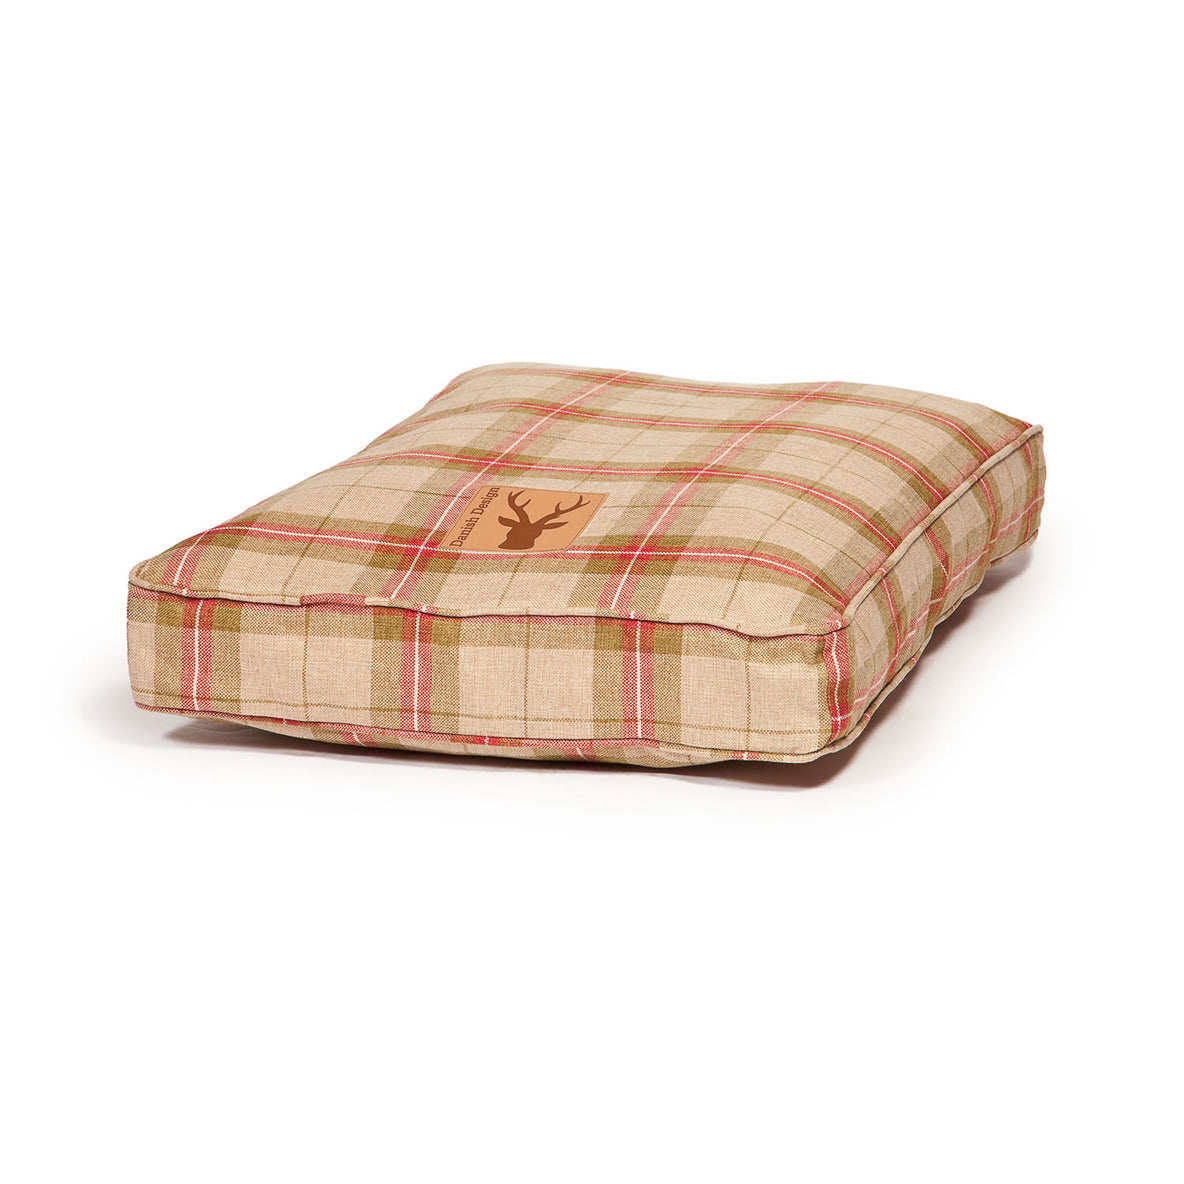 Danish Design Newton Box Bed Cover in Moss